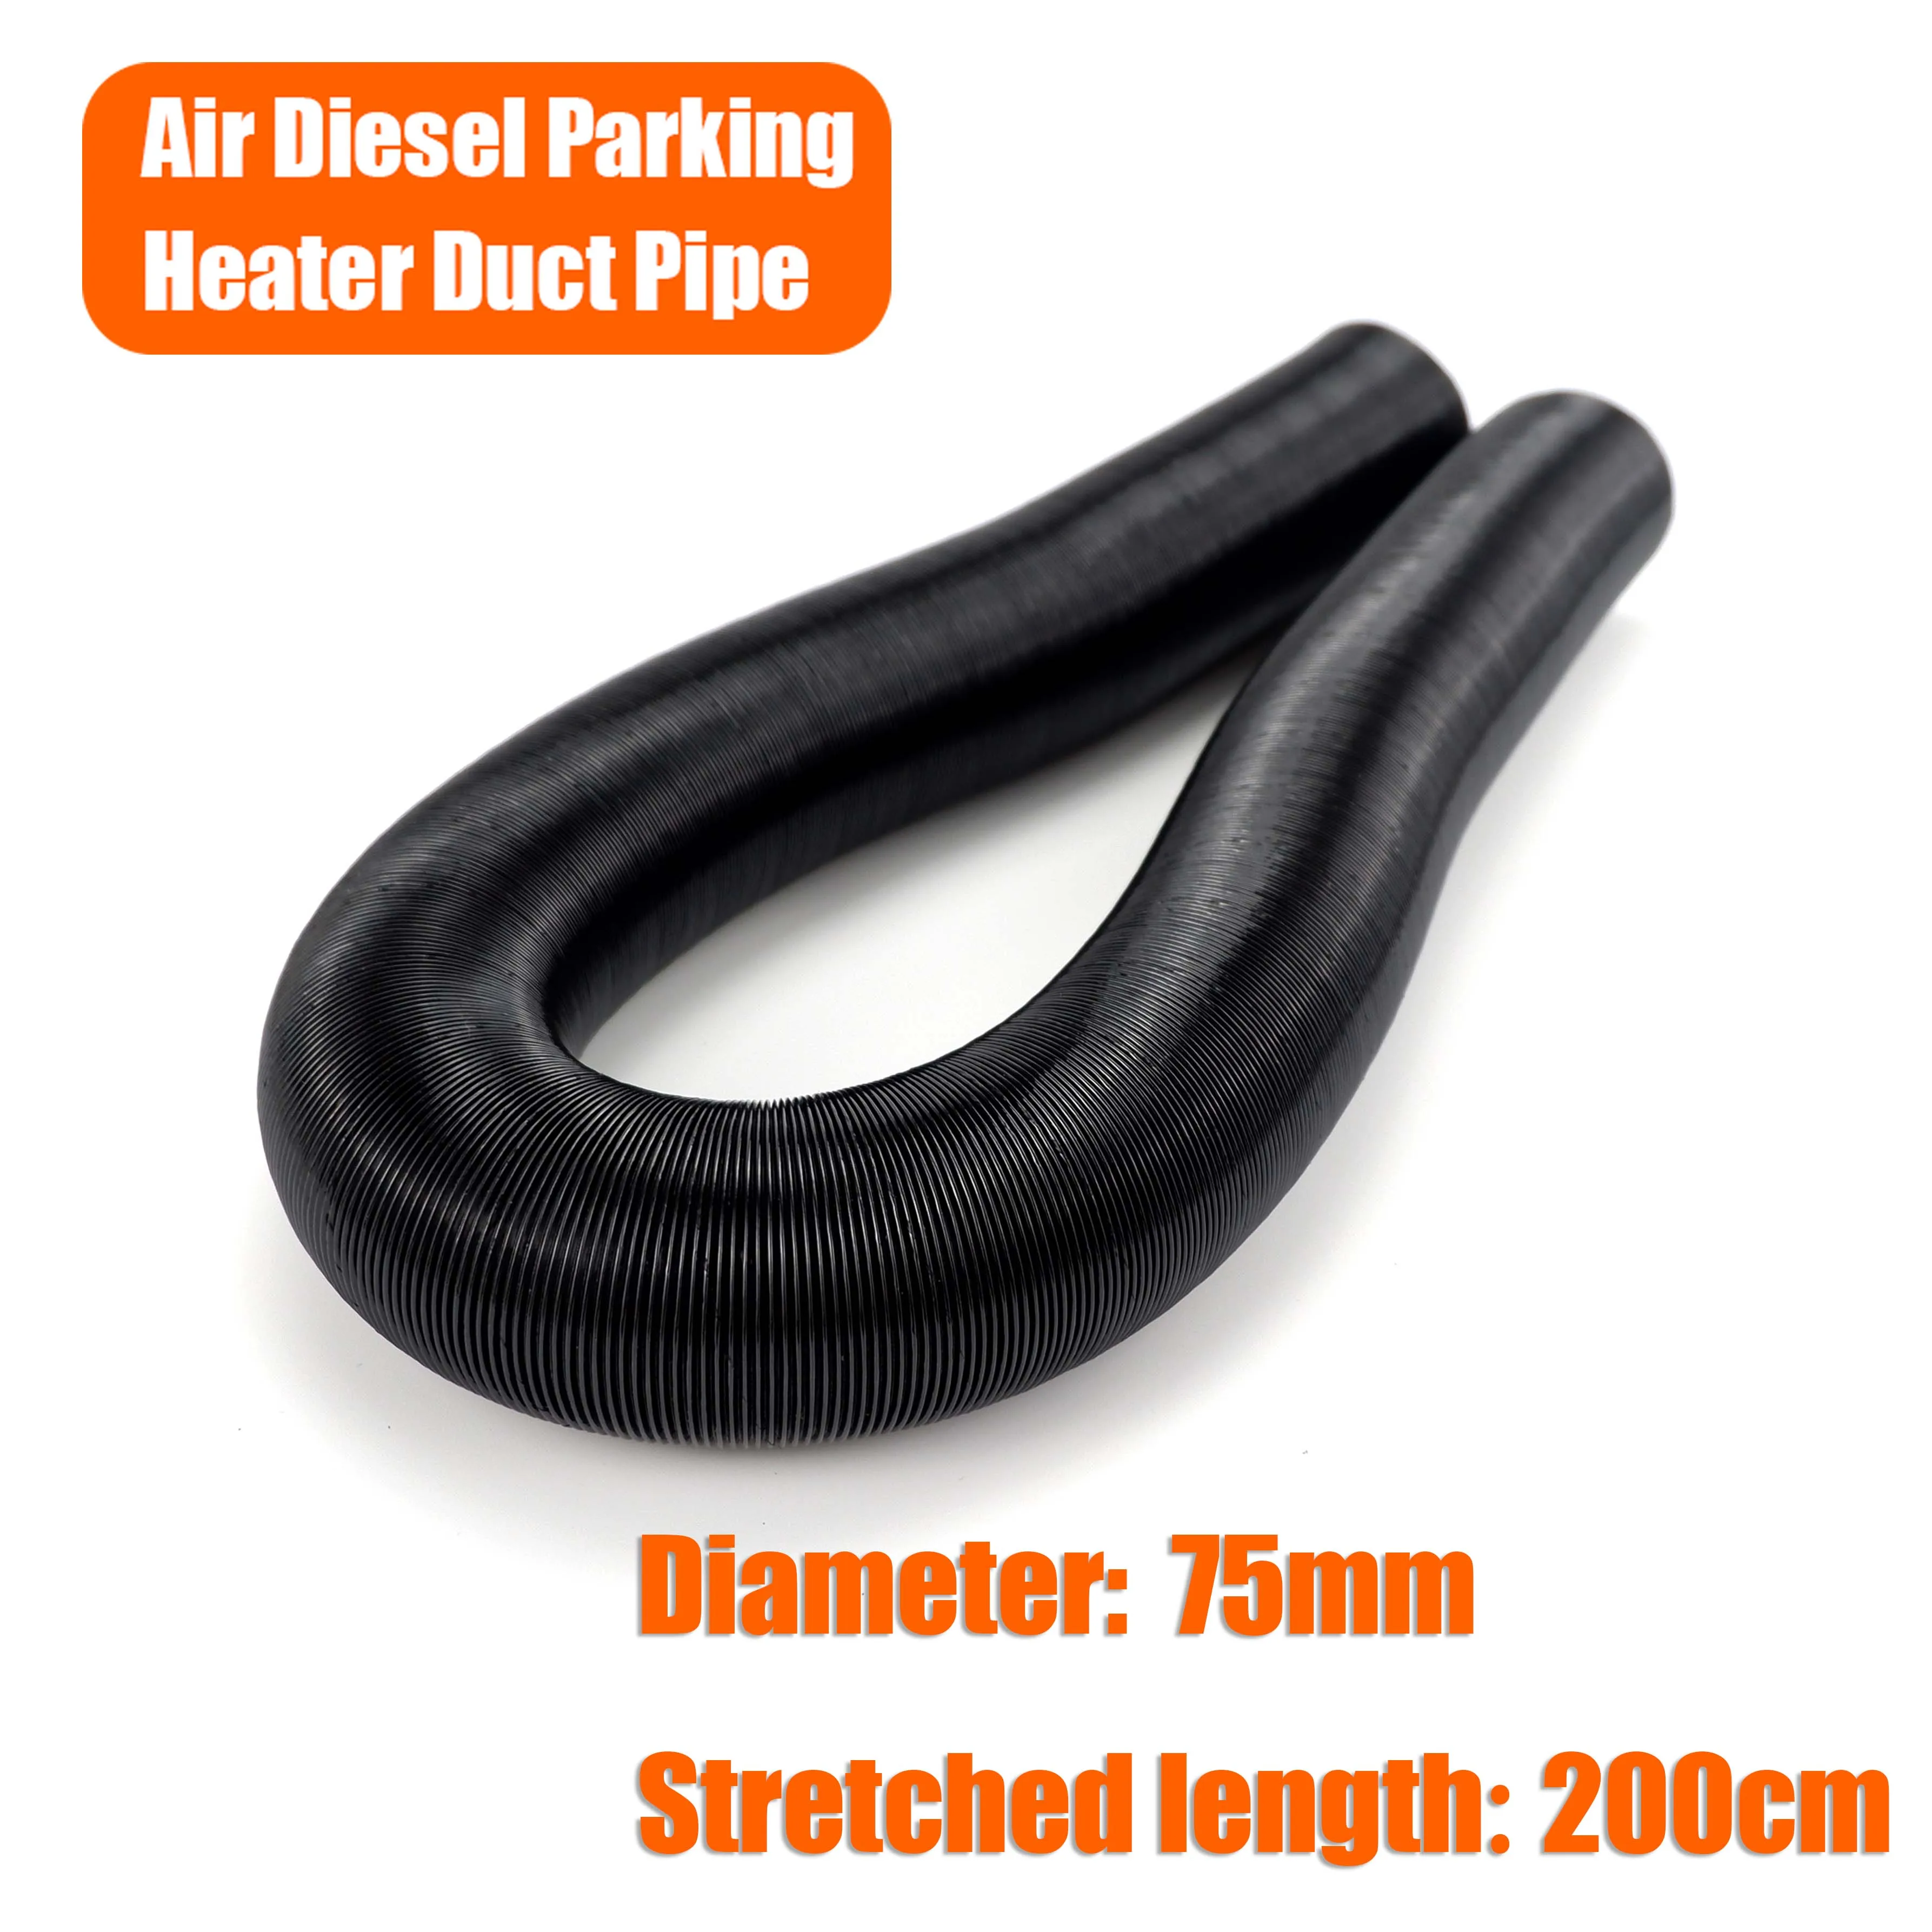 75mm Diameter 100-200cm Length Air Heater Duct Pipe Tube Hose Line Black Diesel Parking Heater For Webasto Eberspacher Propex